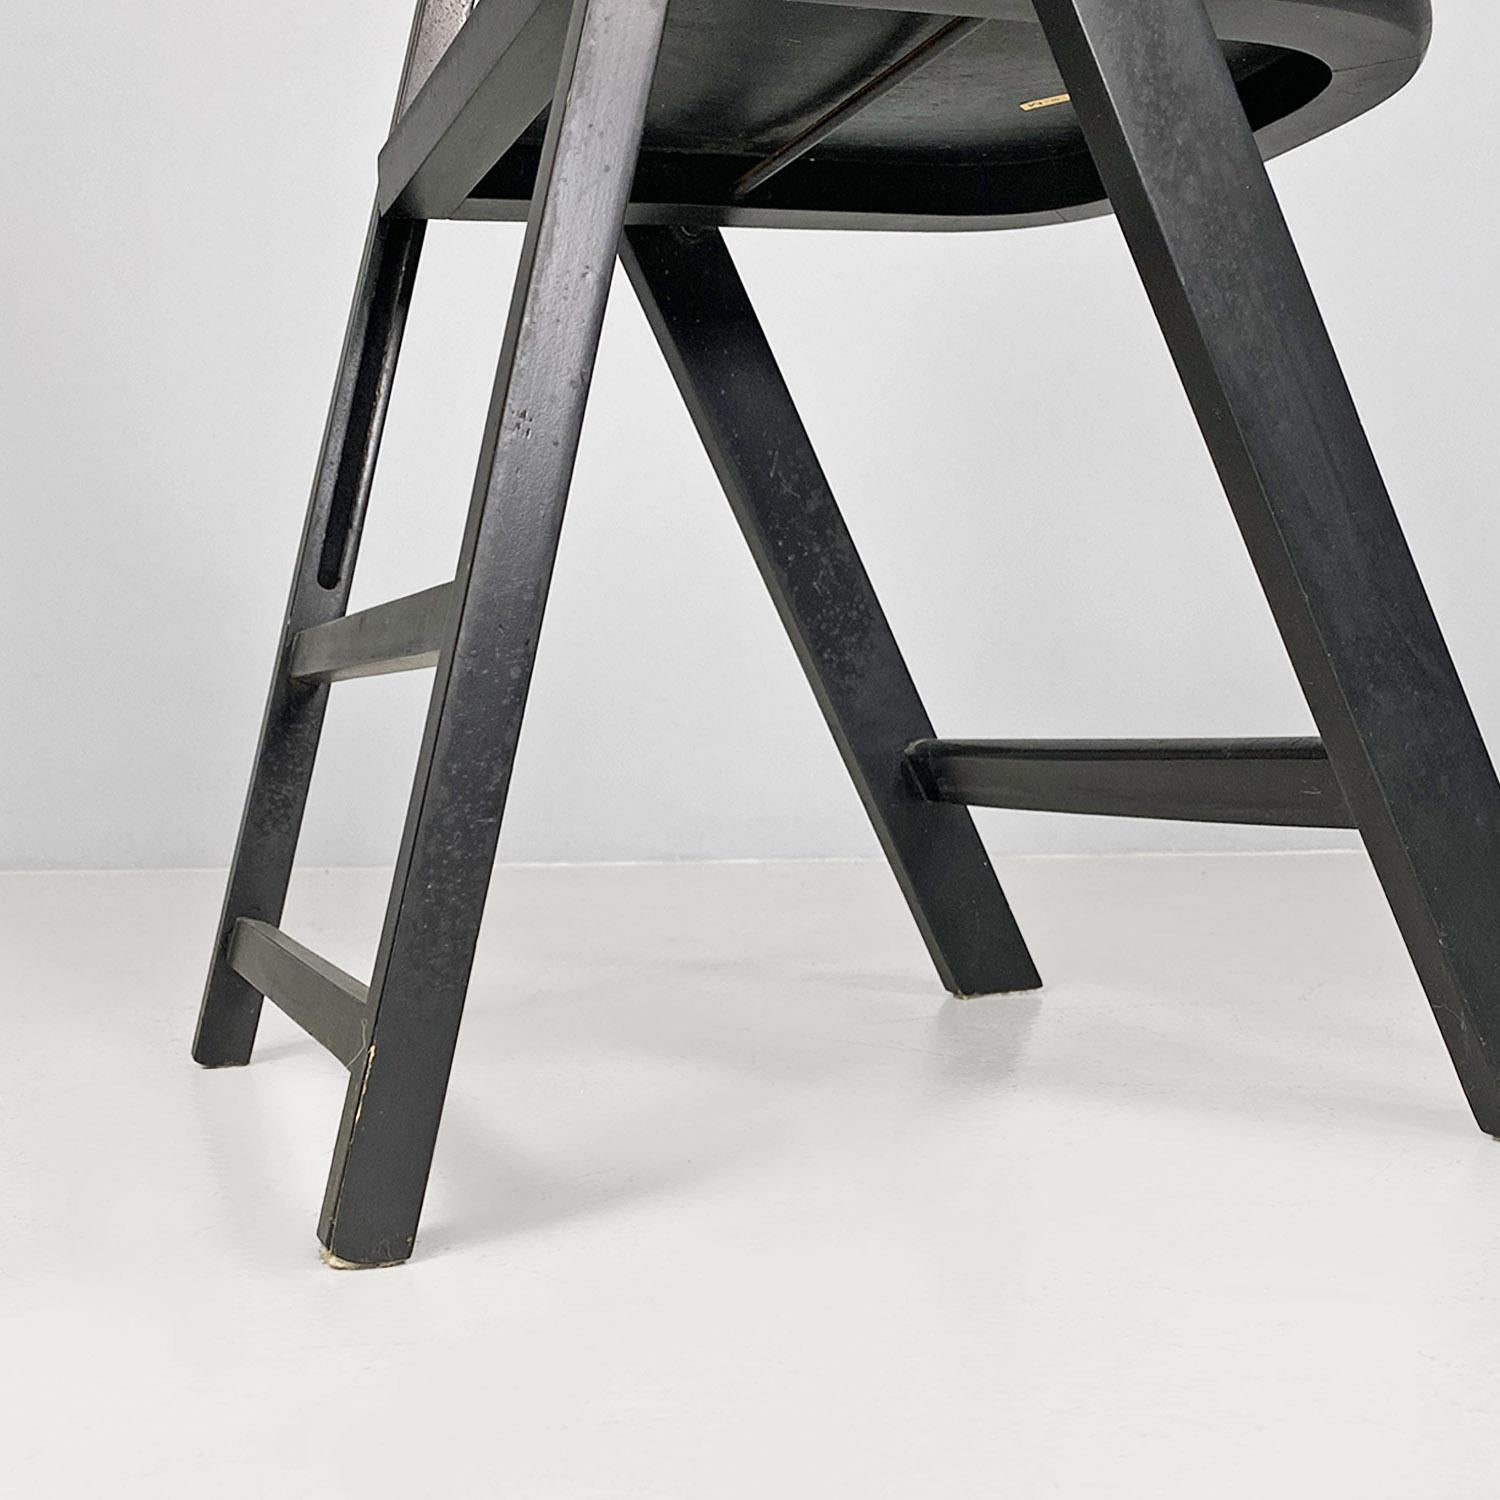 Italian folding chair, black wood, Achille and Pier Giacomo Castiglioni 1960s For Sale 6